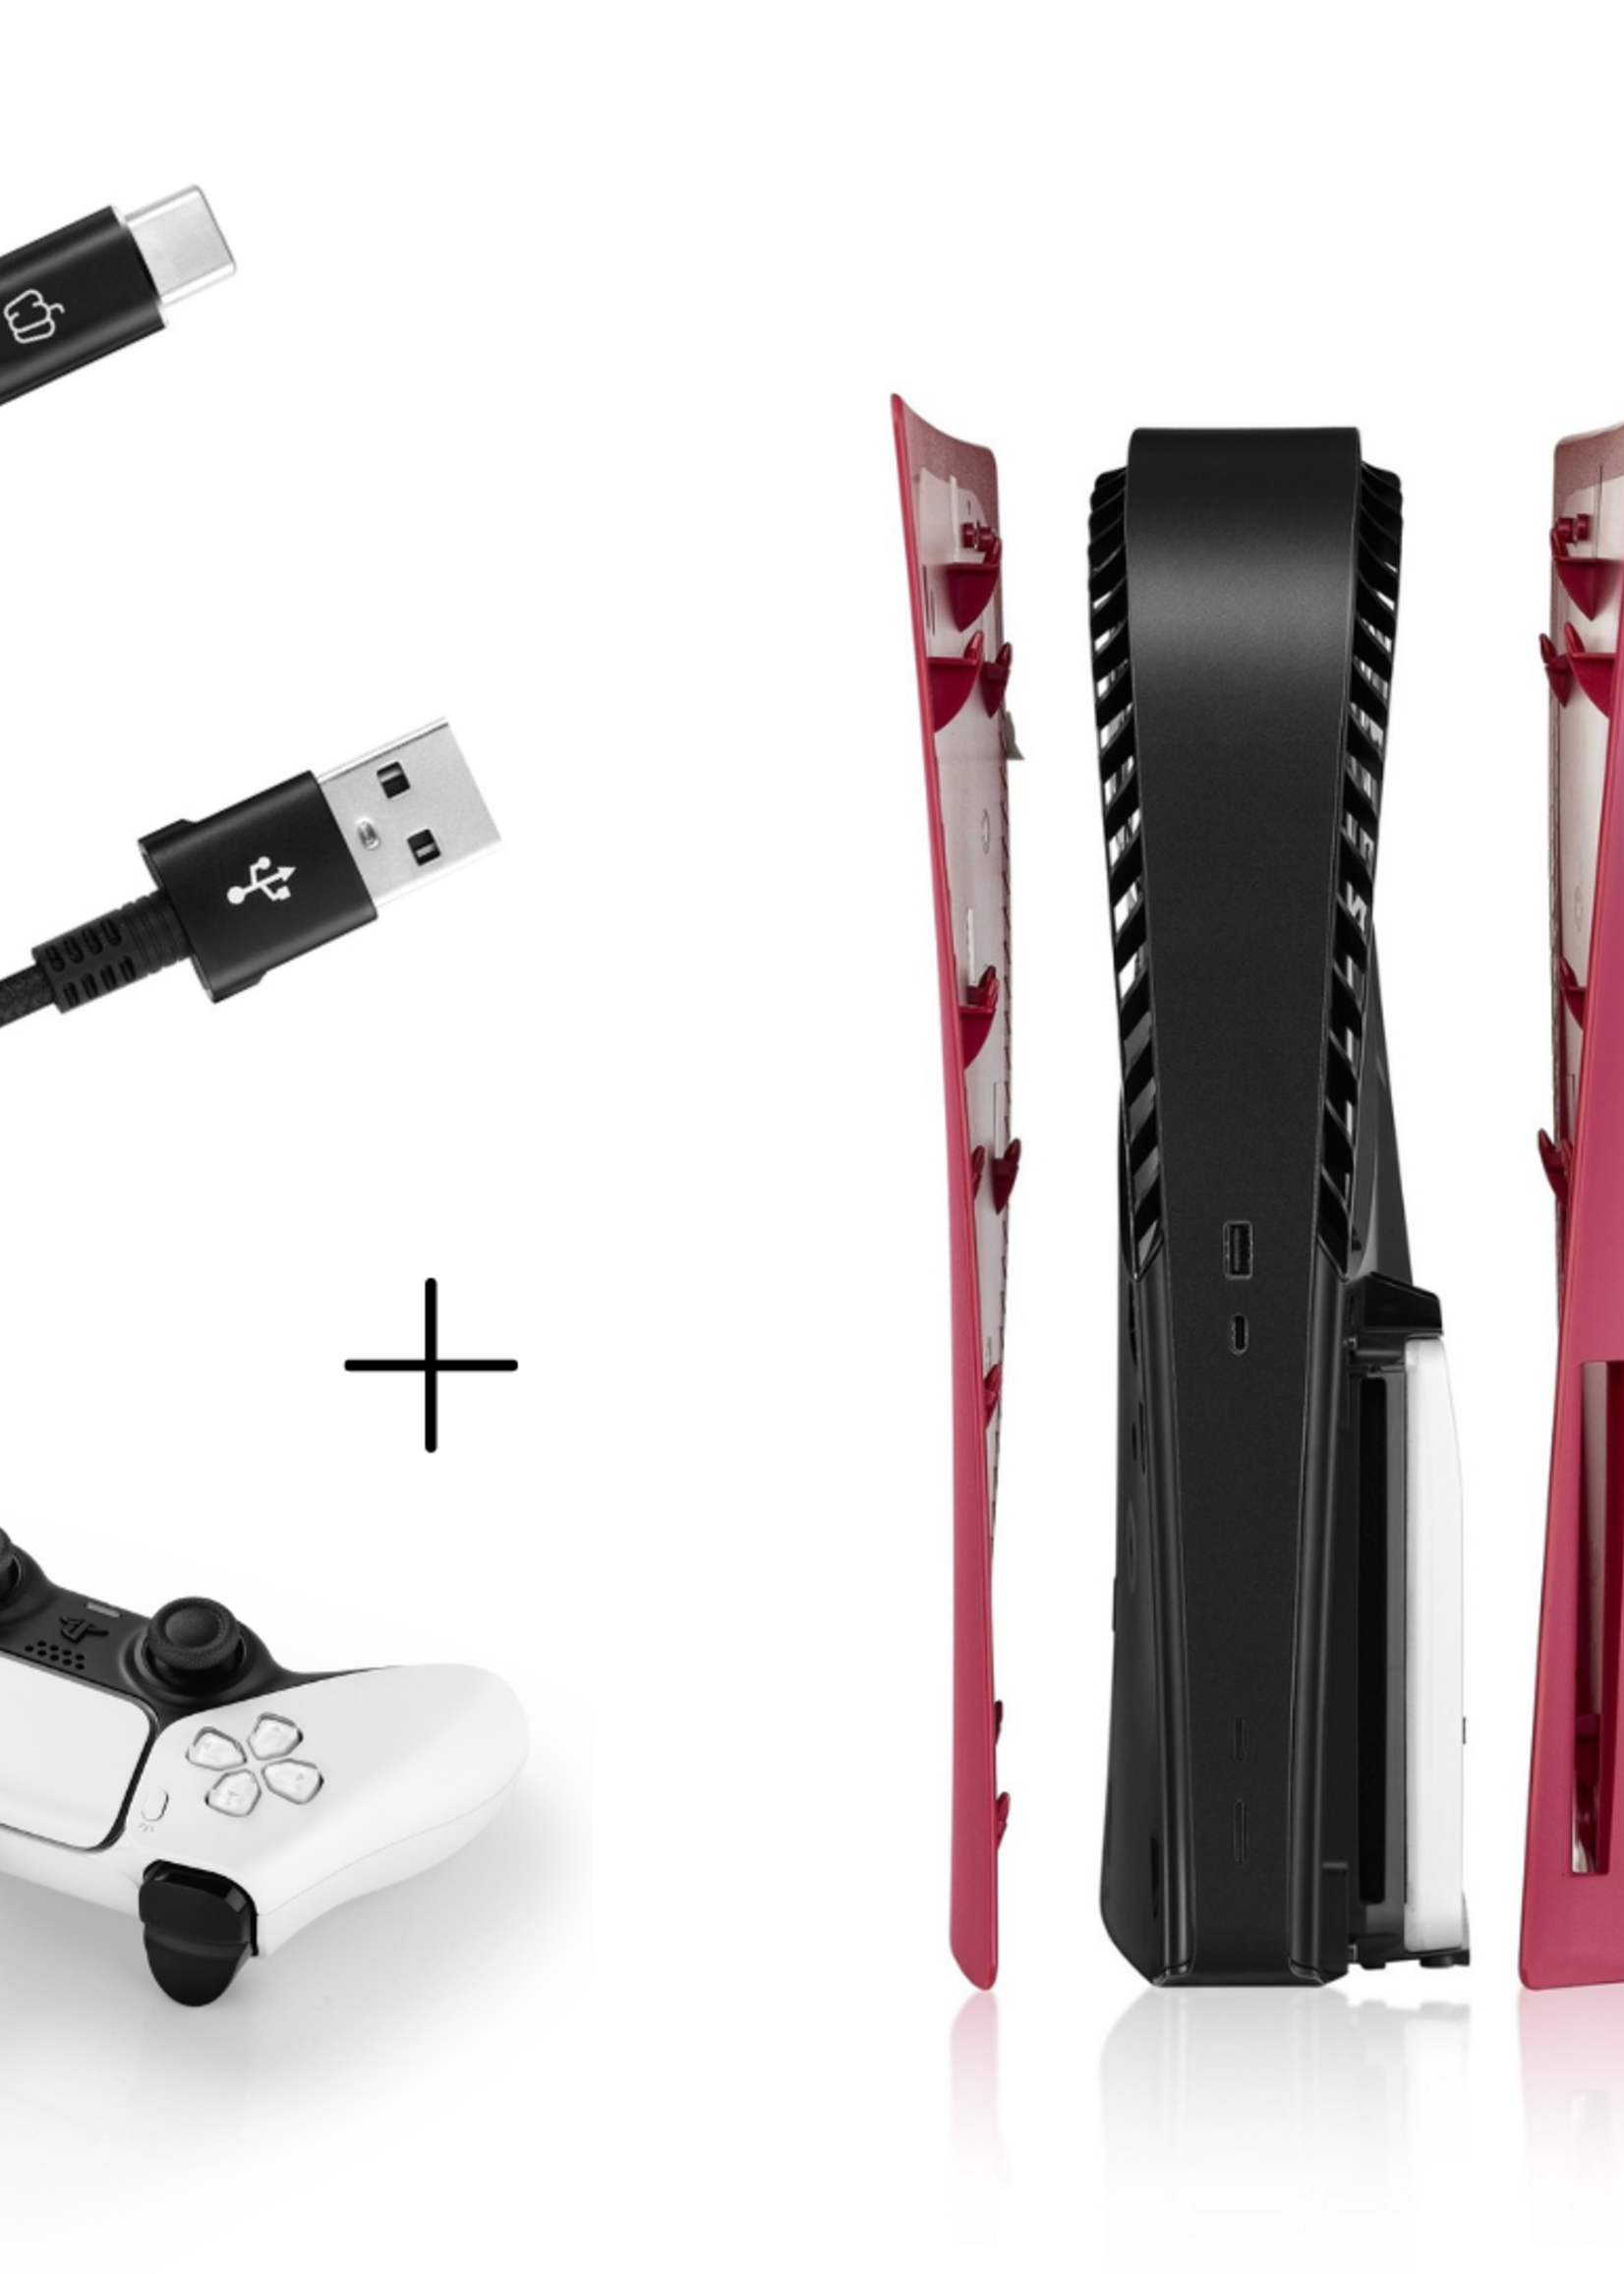 PS5  Faceplate Cosmic Red + USB-A naar USB-C Kabel 3 Meter